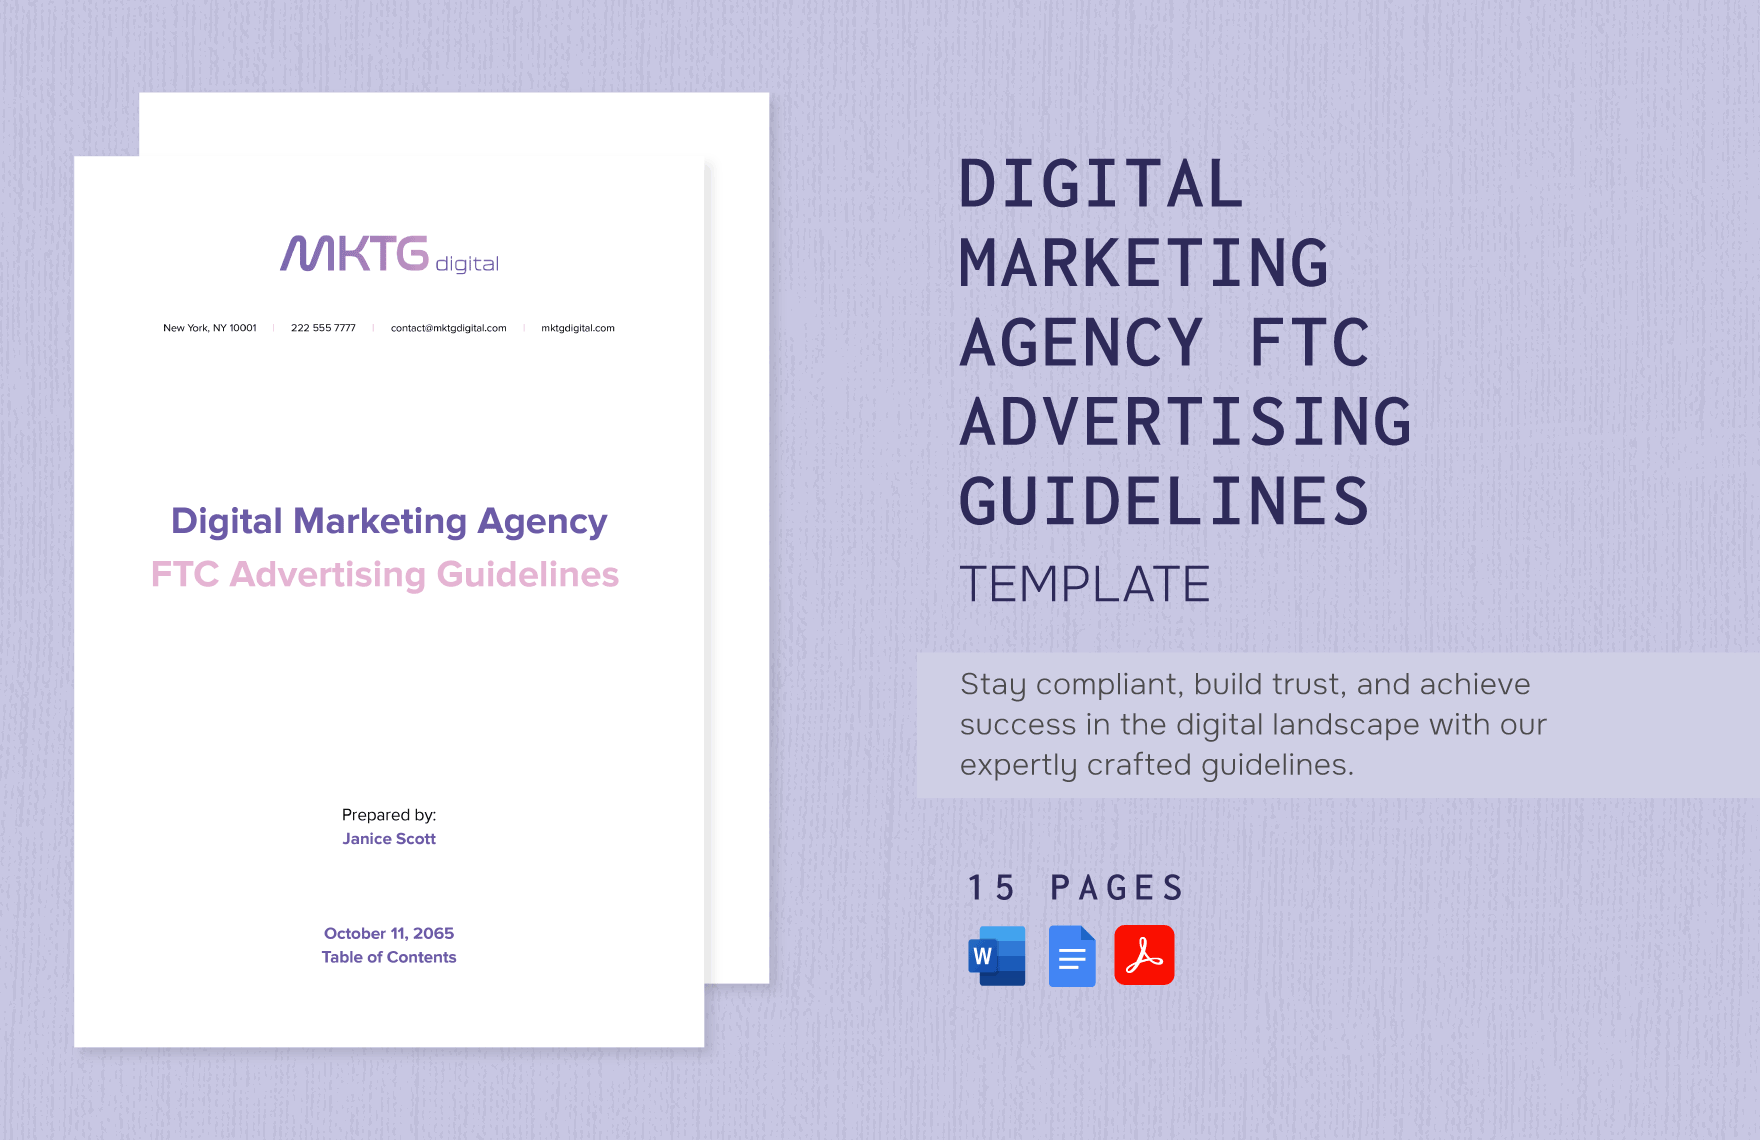 Digital Marketing Agency FTC Advertising Guidelines Template